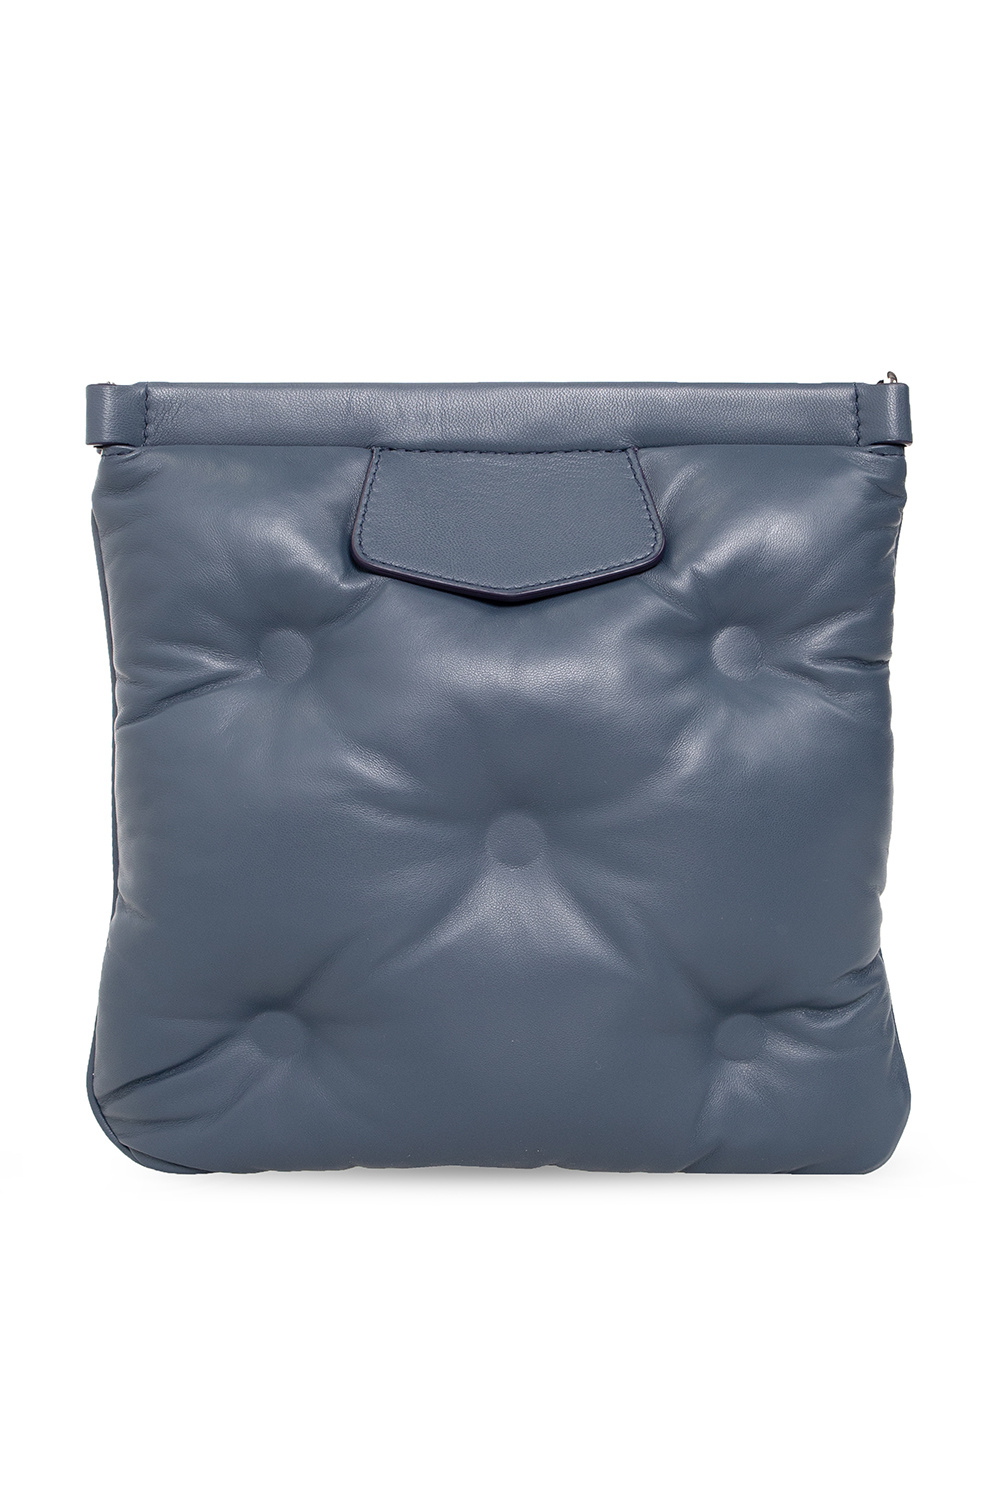 Maison Margiela ‘Glam Slam’ shoulder Metallic bag